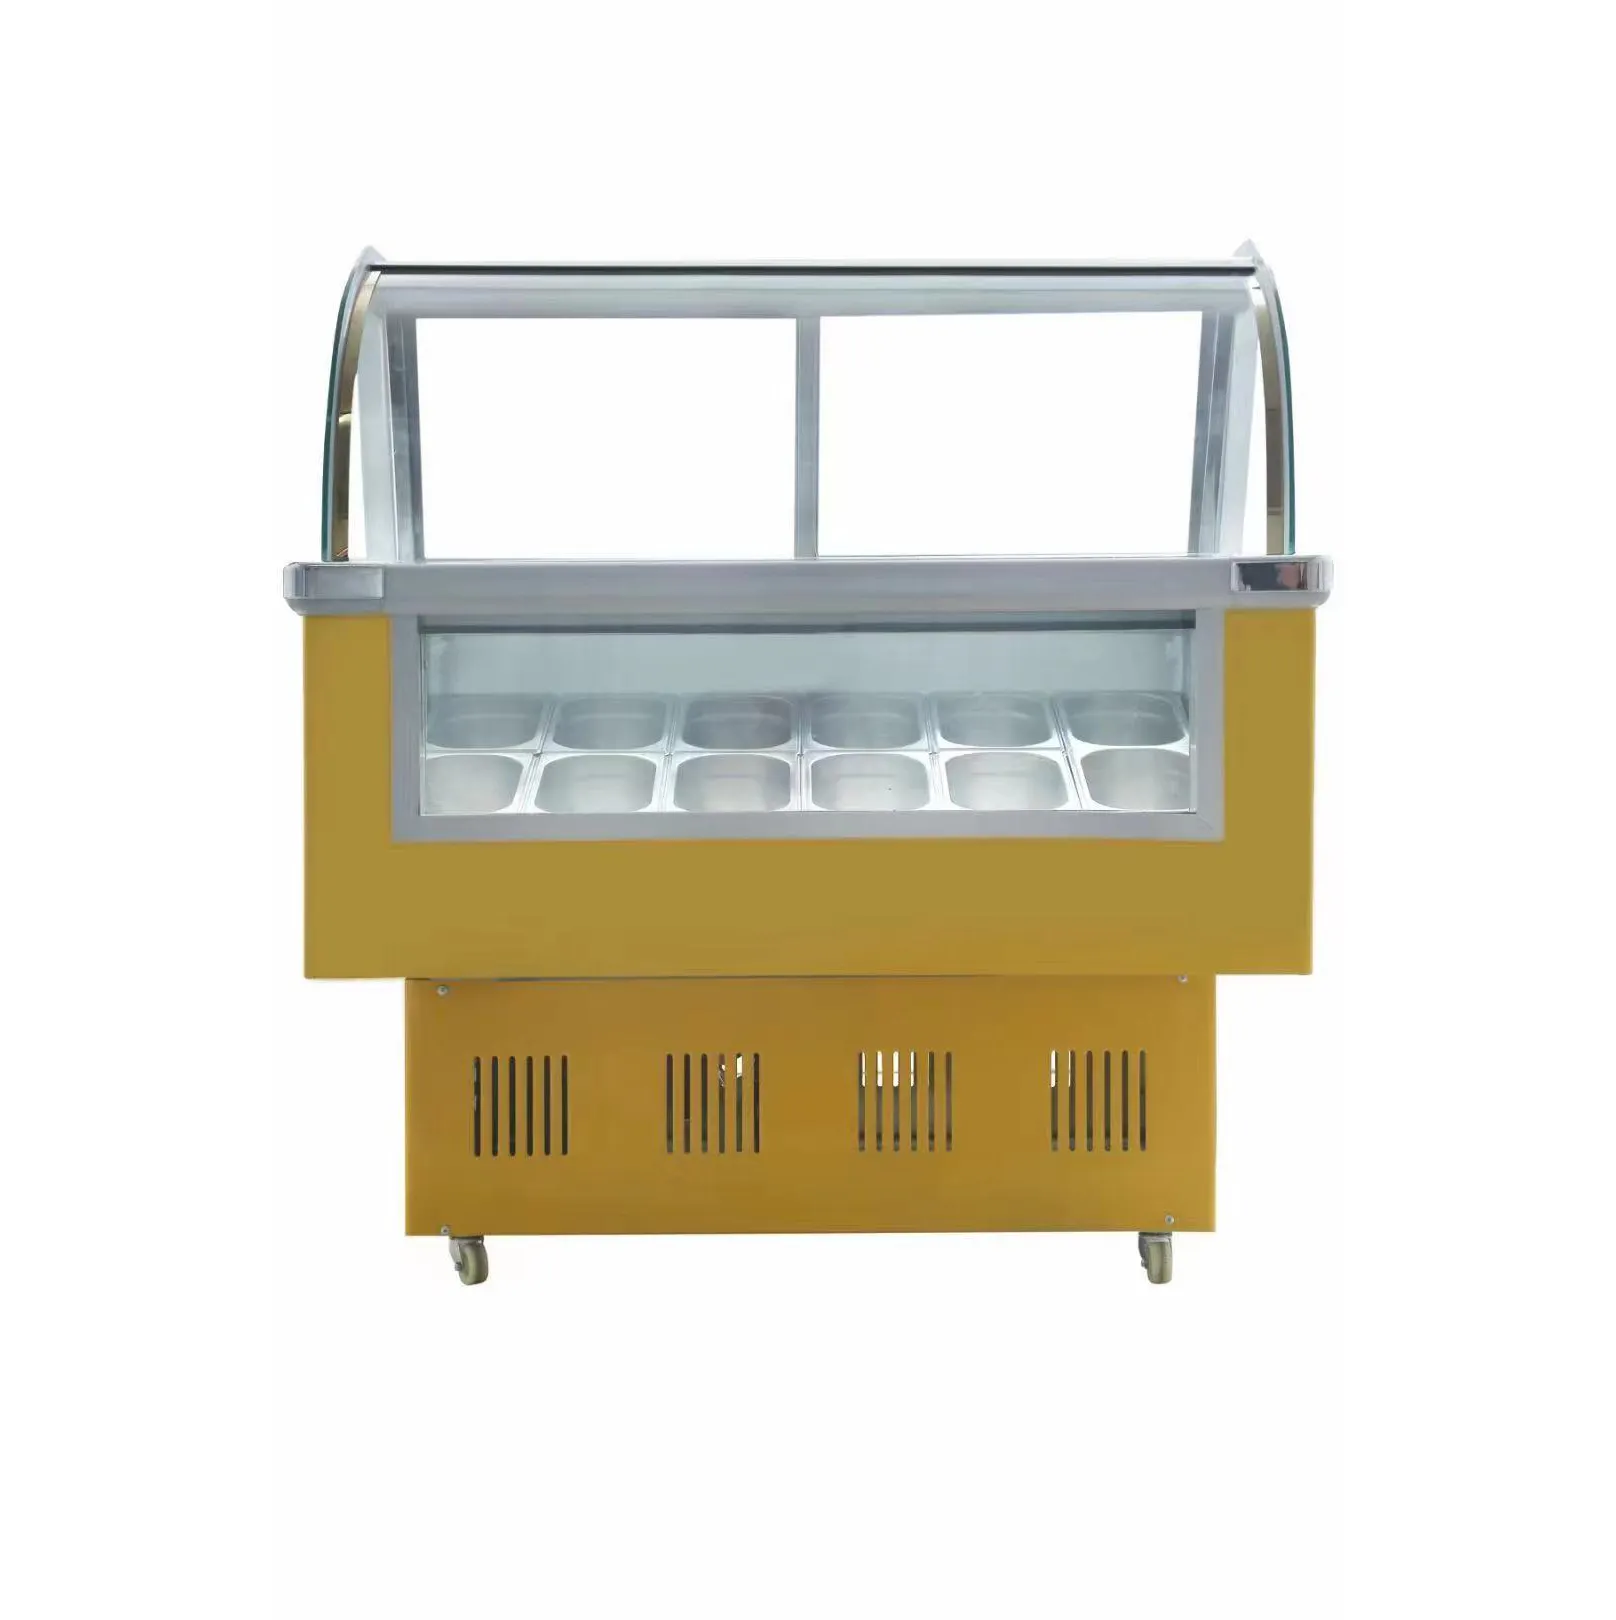 Single-Temperature Ice Cream Refrigerator Showcase with 6 Buckets/10 Trays